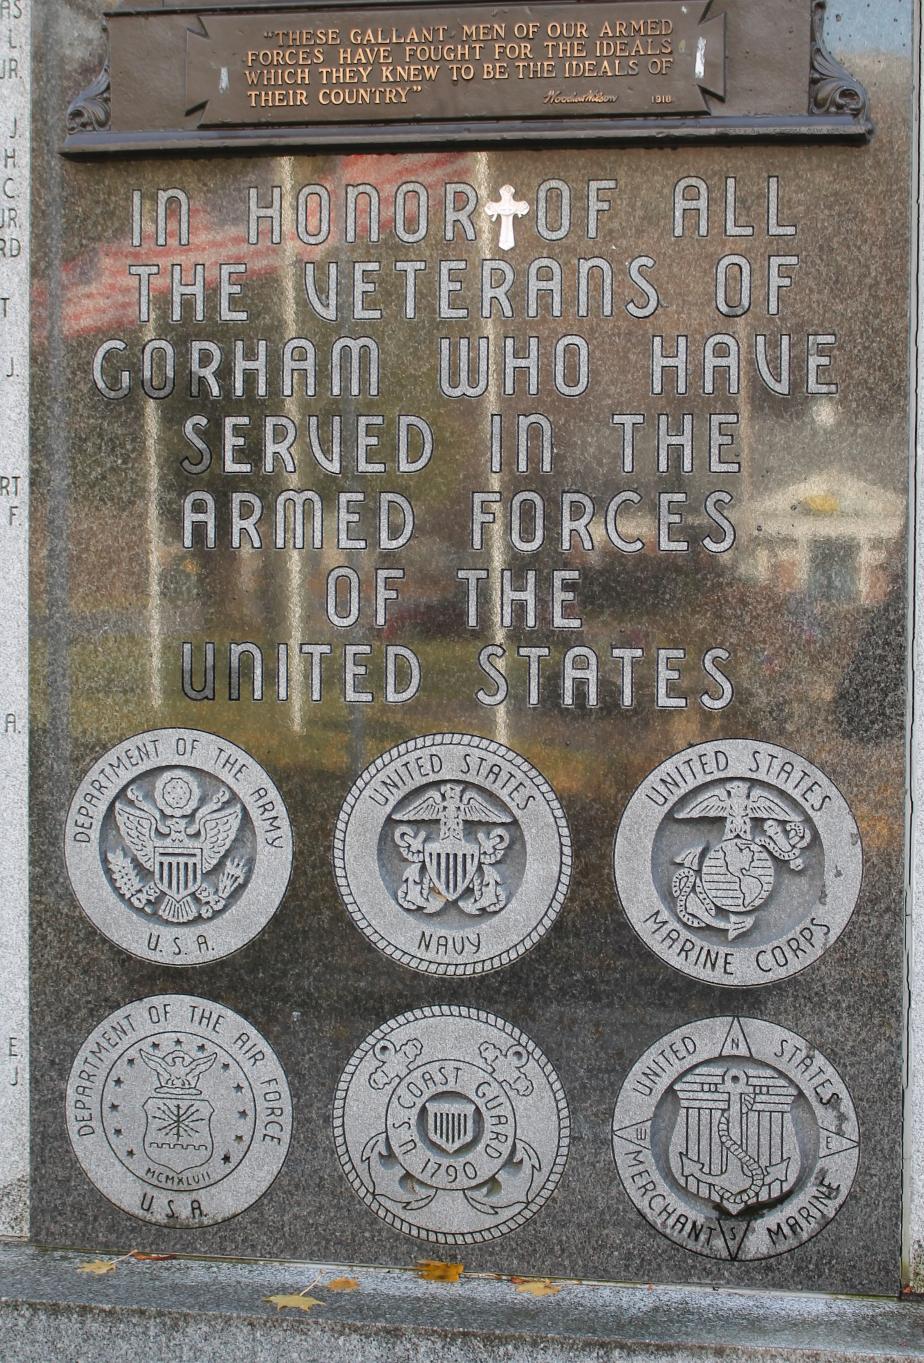 Gorham New Hampshire World War I Veterans Honor Roll